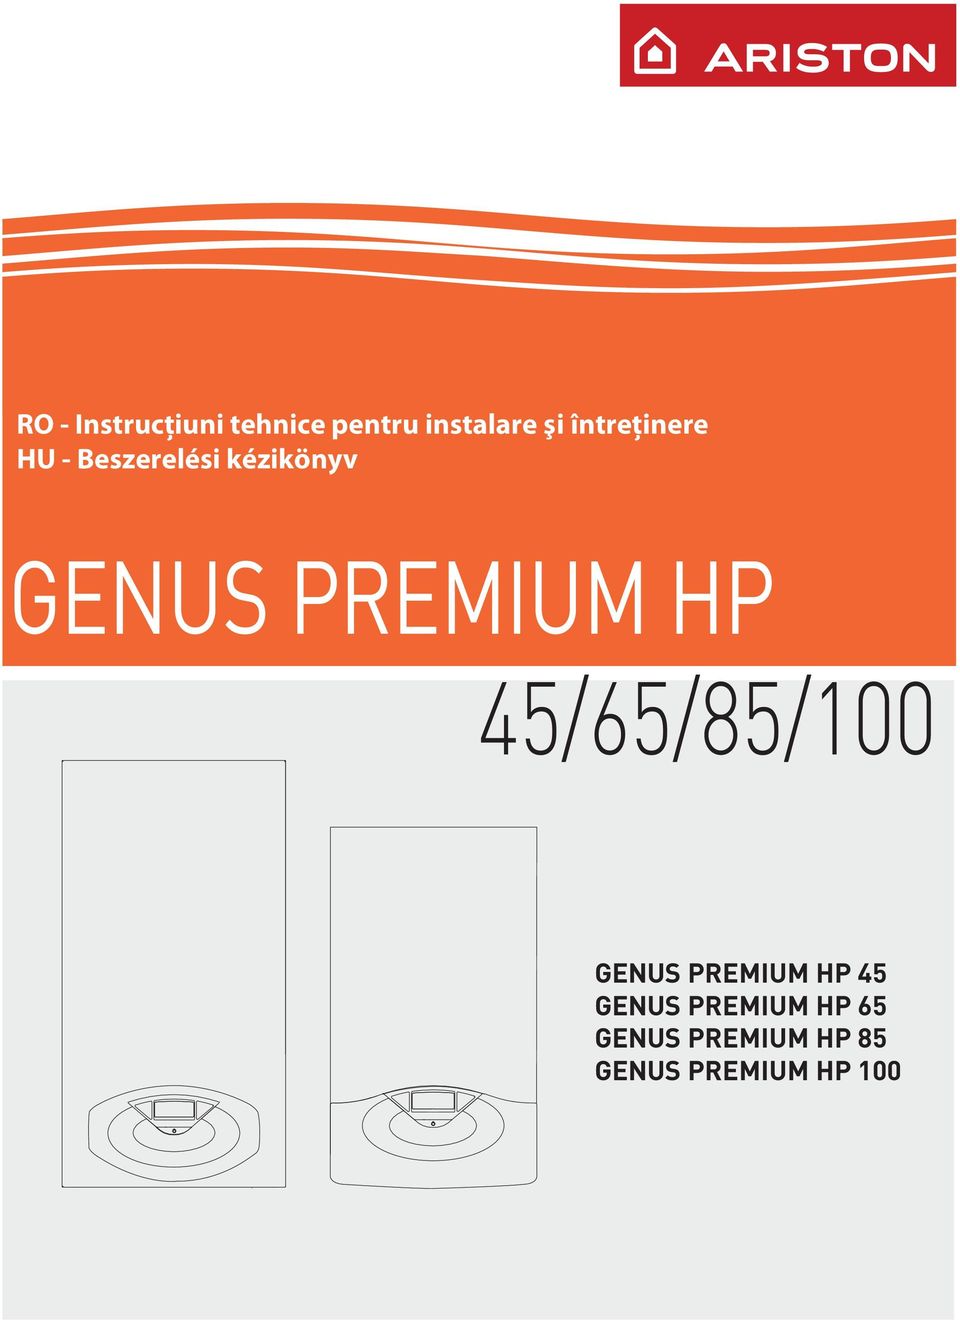 kézikönyv GENUS PREMIUM HP 45/65/85/100 GENUS PREMIUM